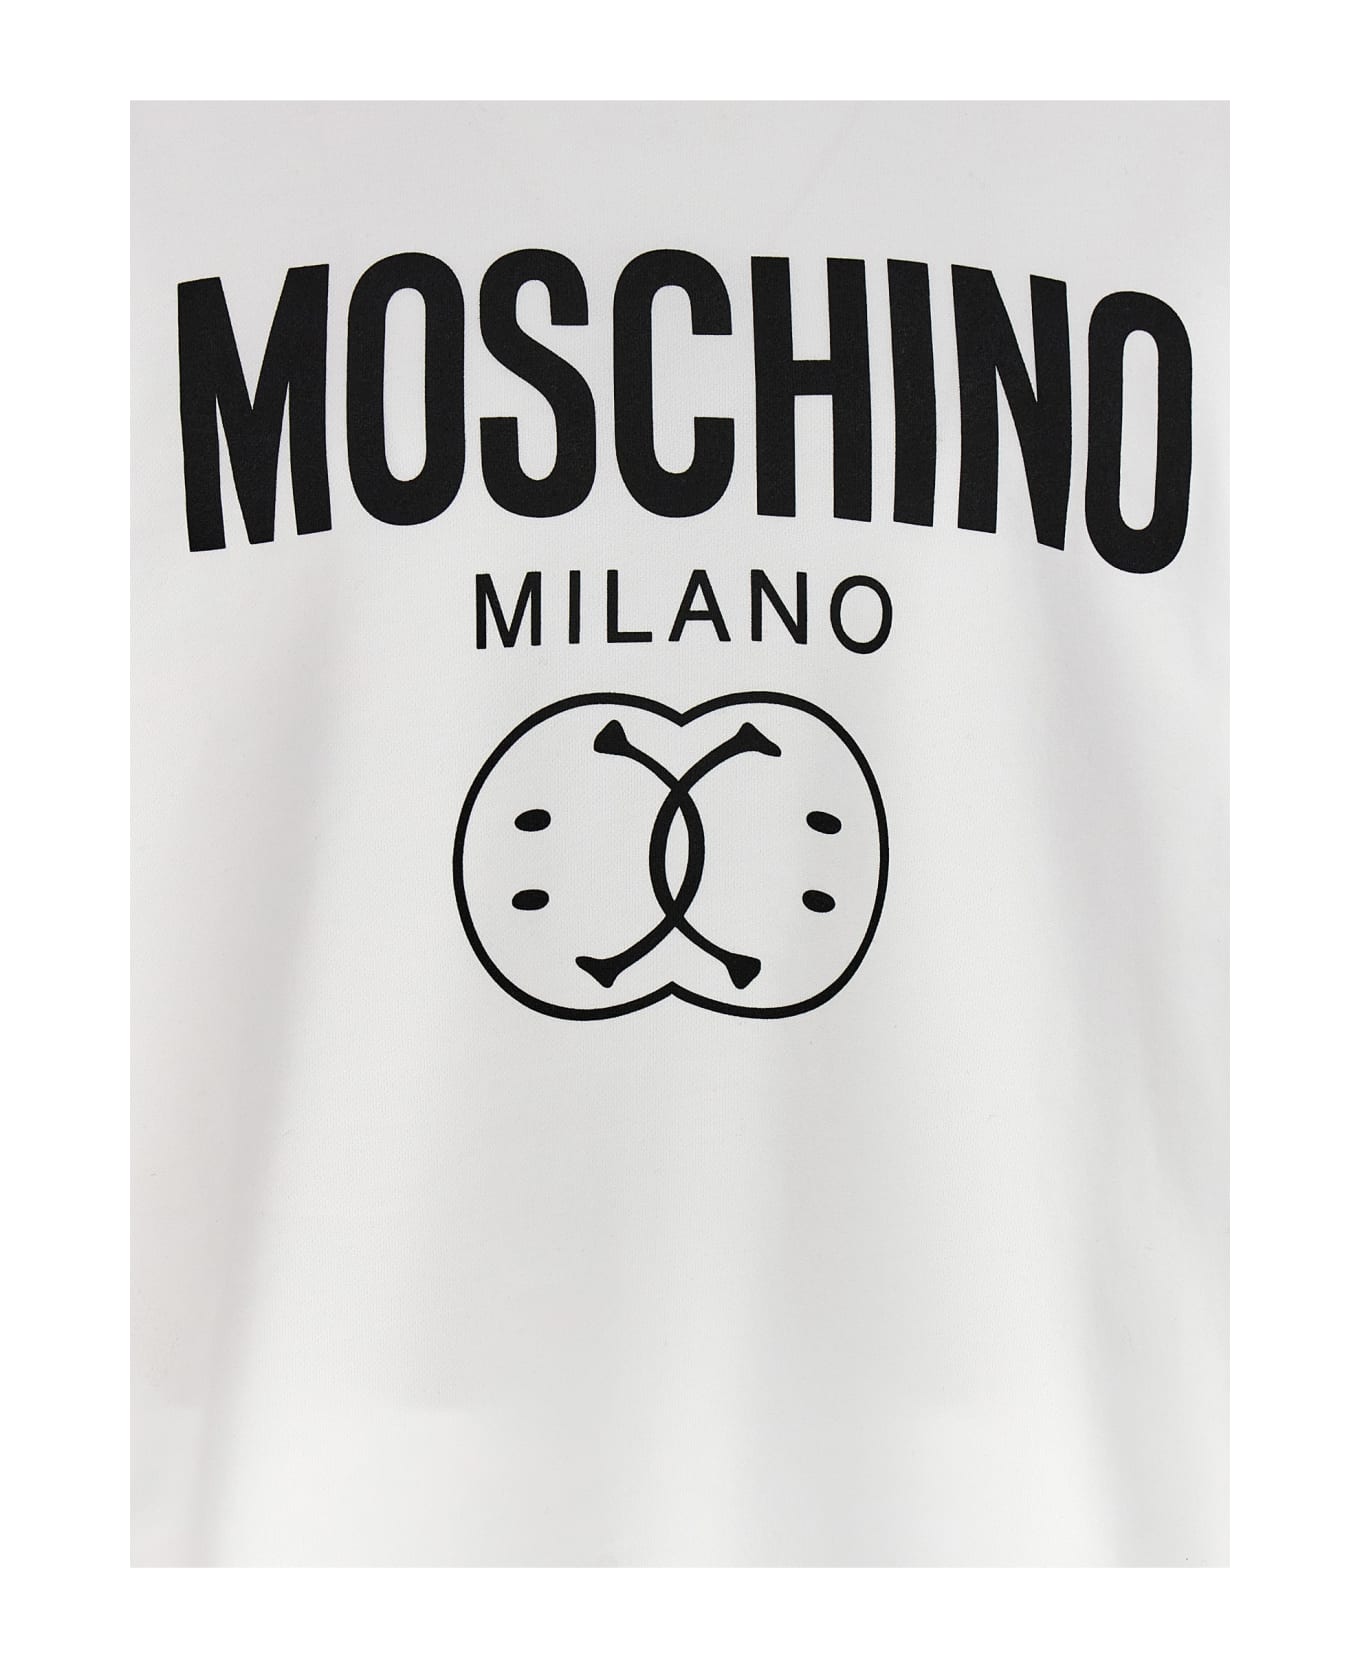 Moschino 'double Smile' Sweatshirt - White/Black